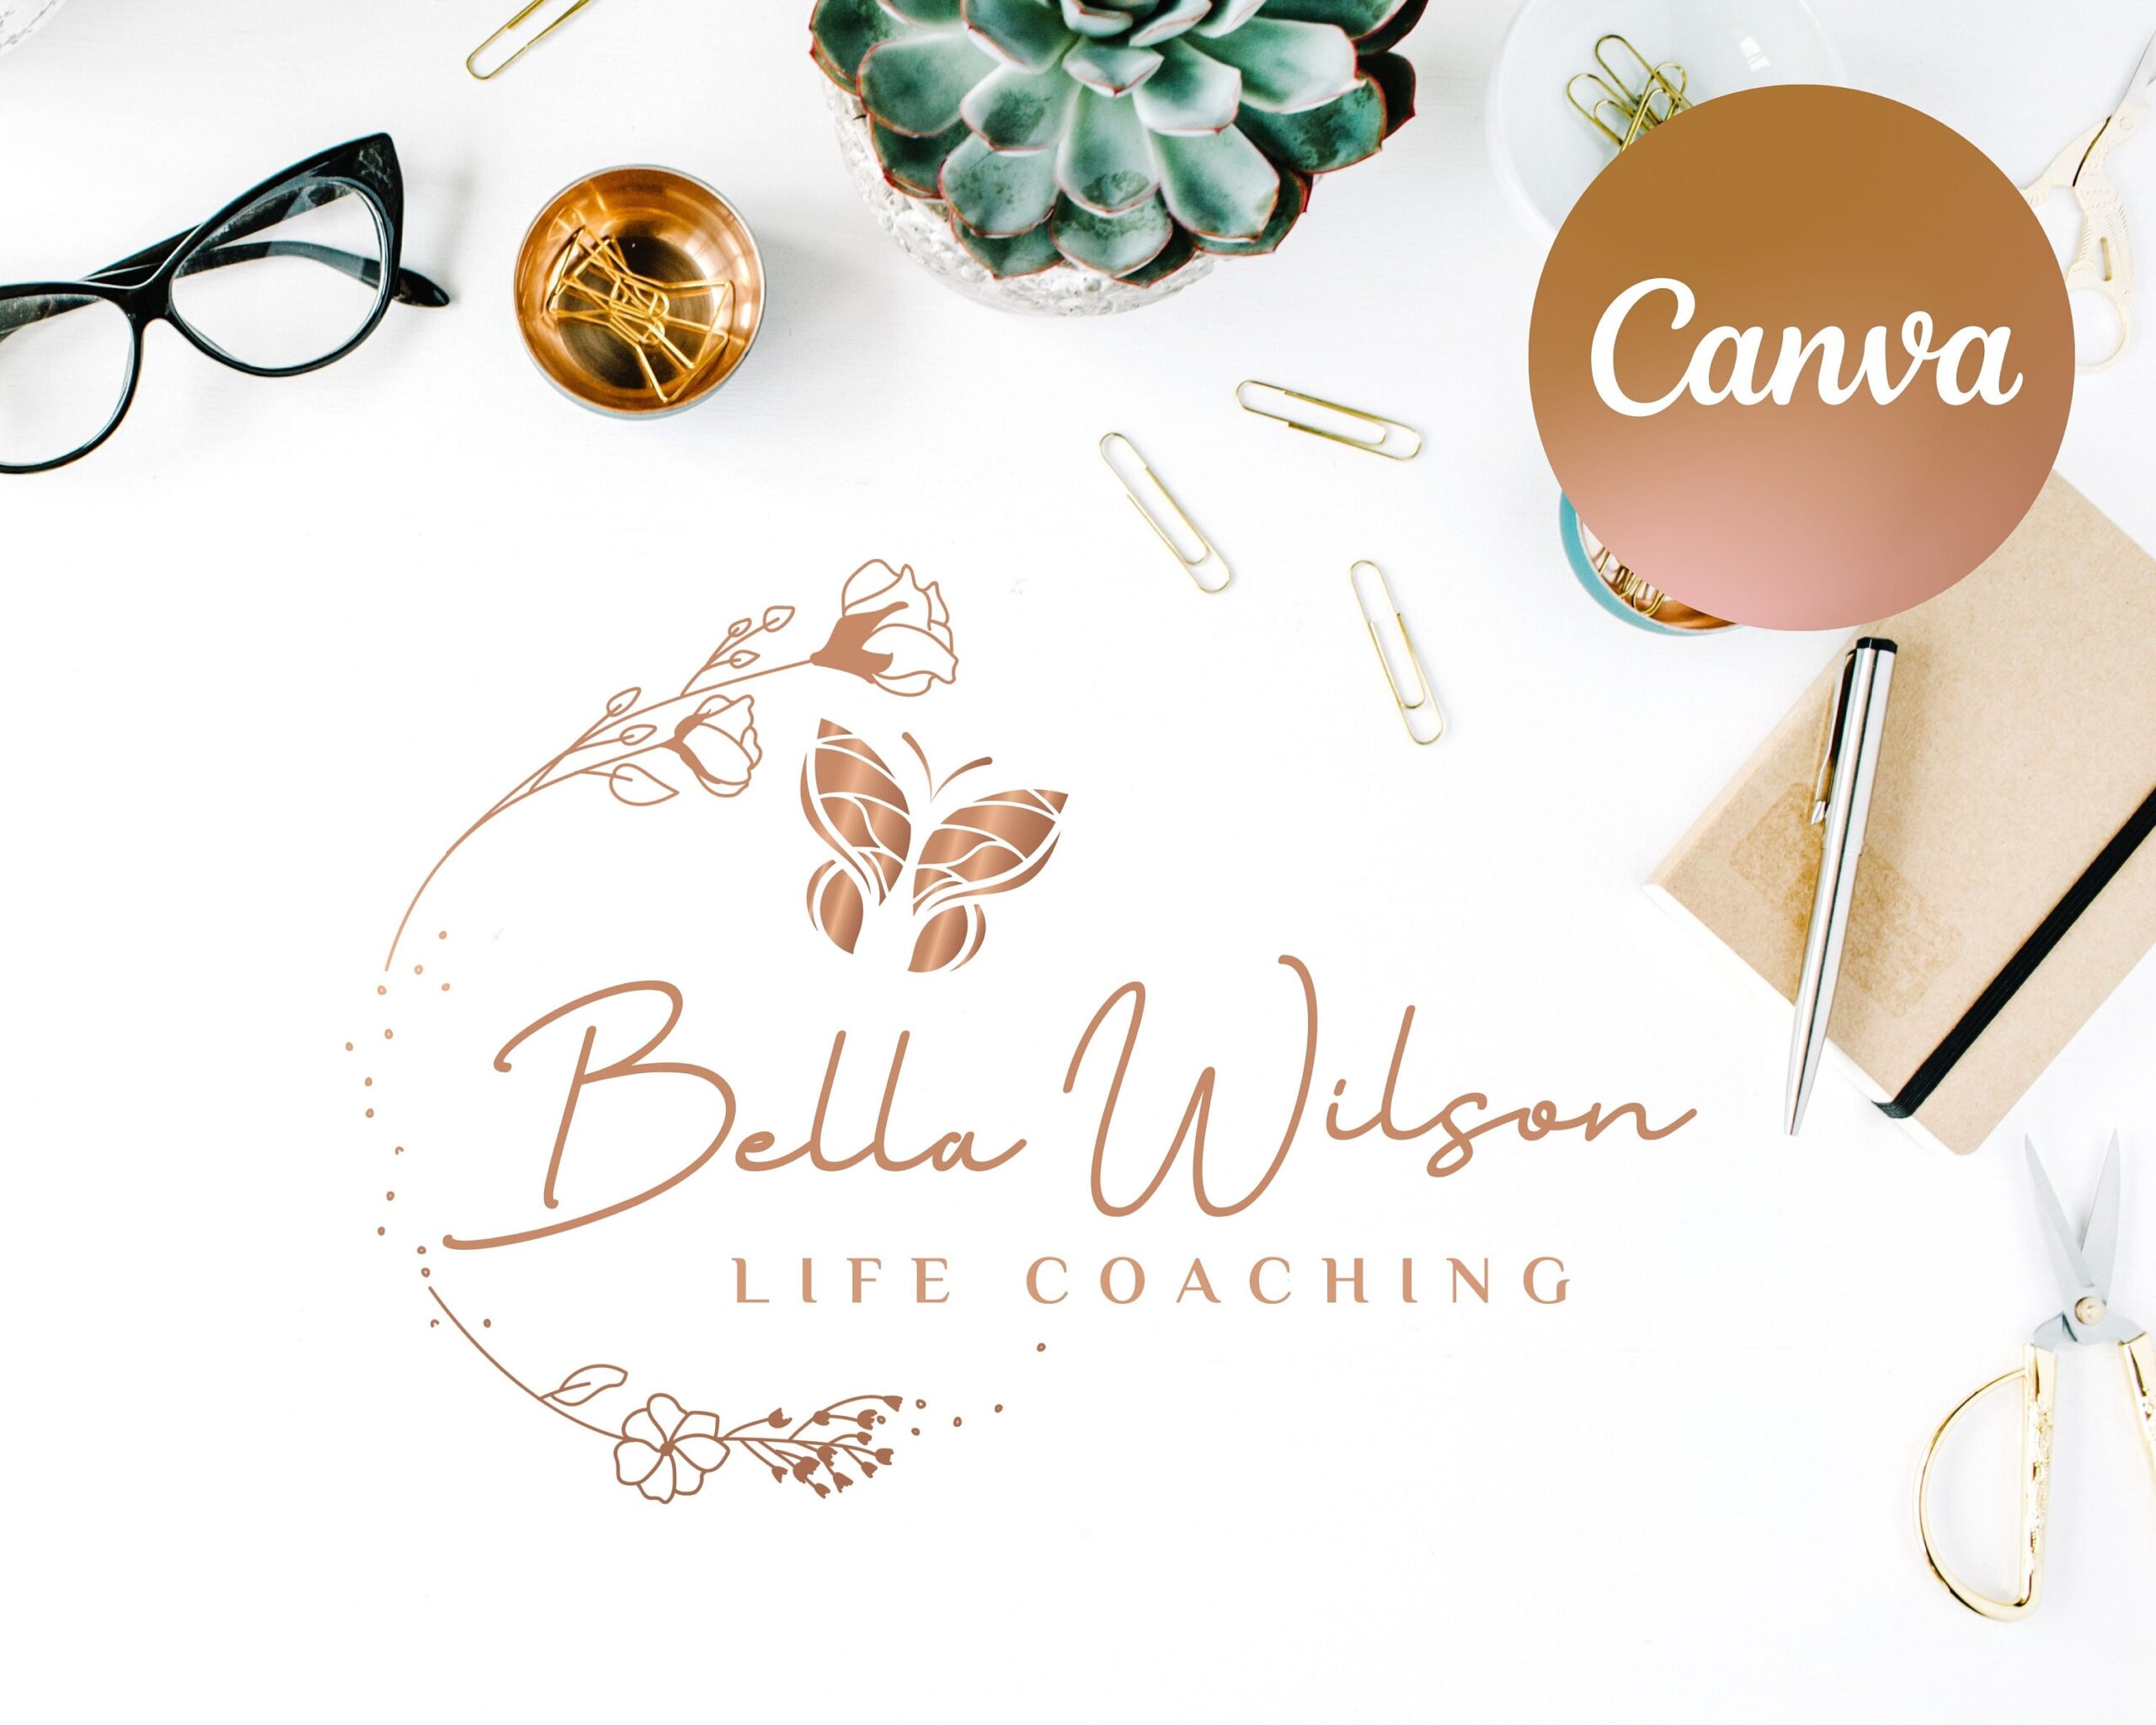 Editable Logo Design -  Life Coaching Circle of Life -  Butterfly Nature -  DIY Design Template -  Wellness Life Coaching Logo -  Canva Templates